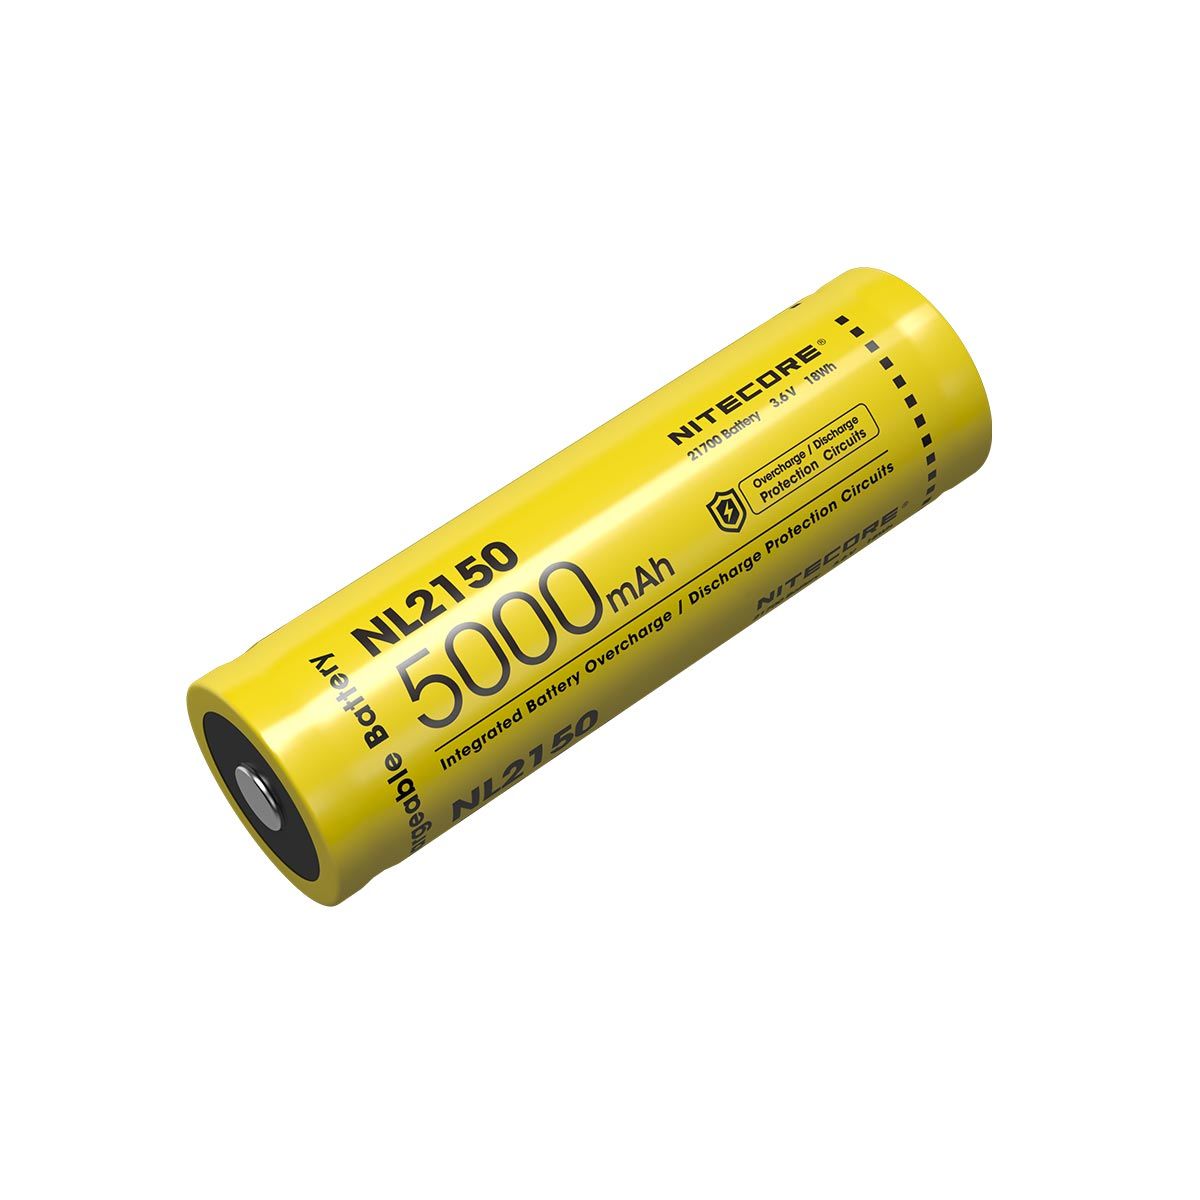 Nitecore NL2150 21700 rechargeable battery - 5000 mAh